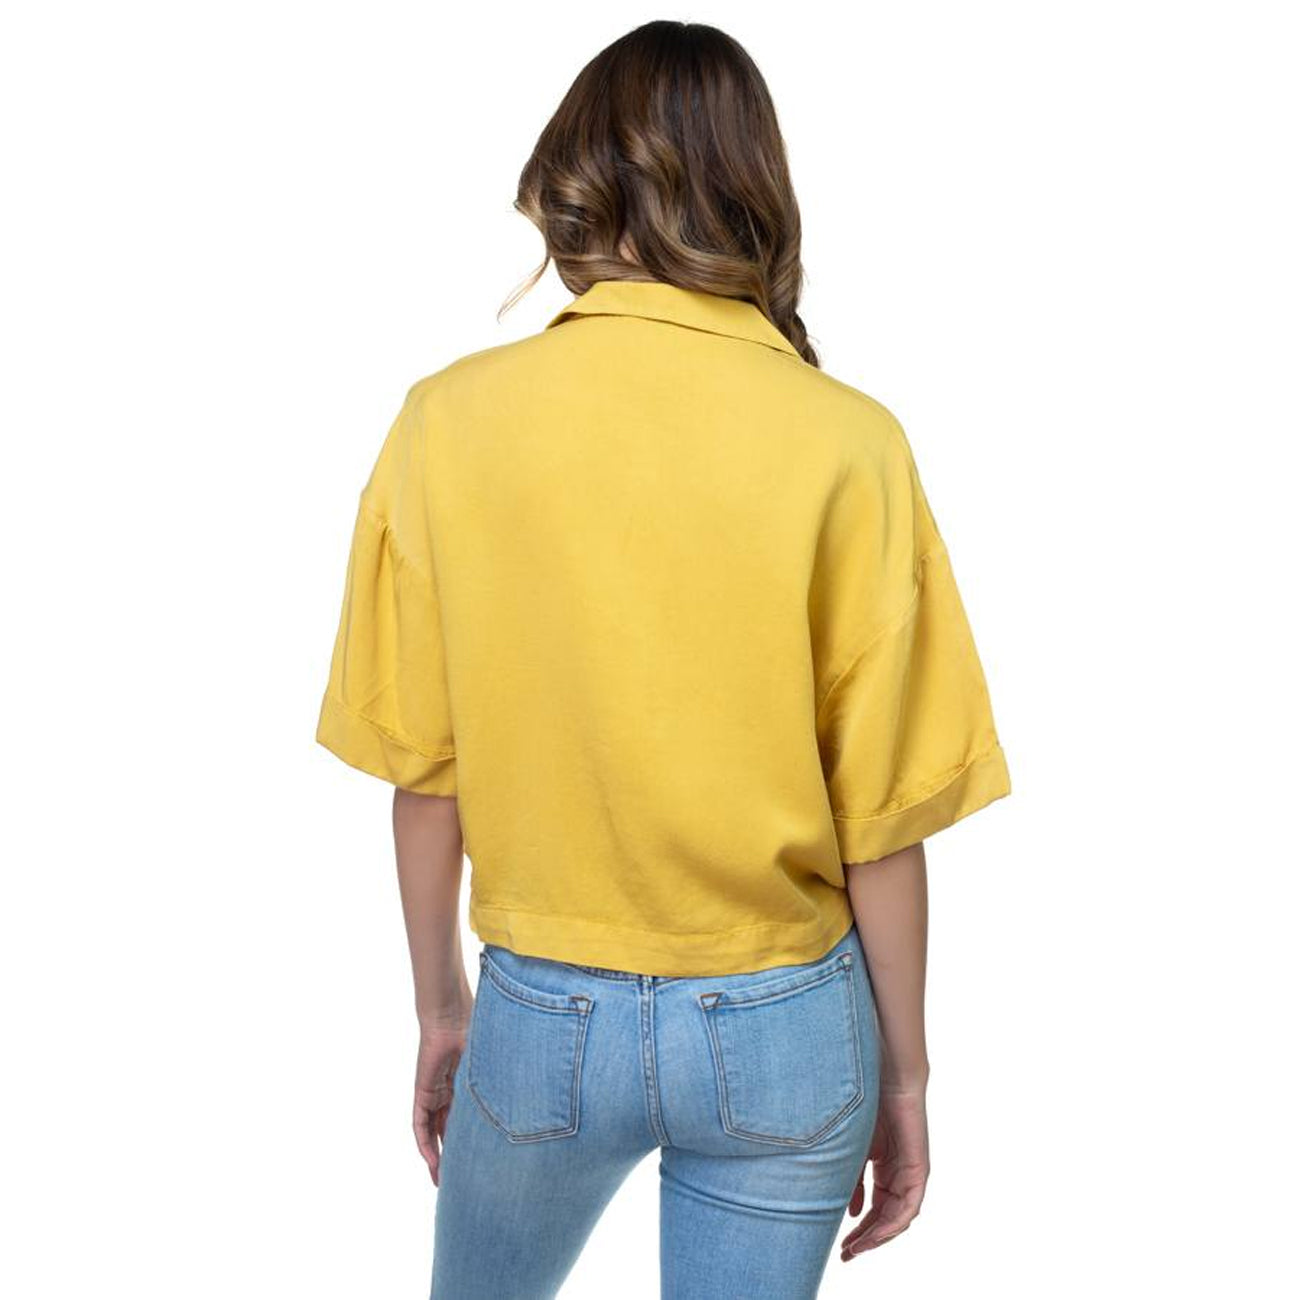 Yellow Boxy Button Down Shirt